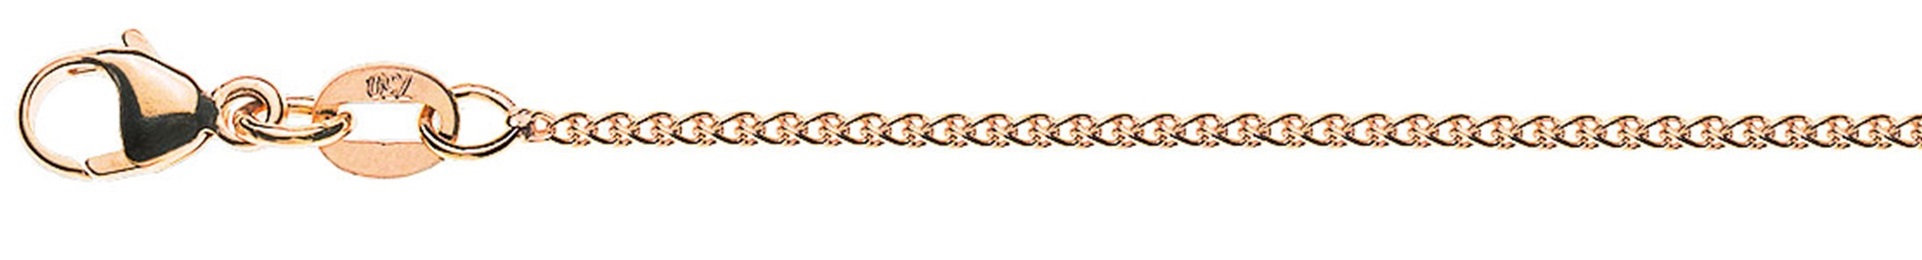 AURONOS Prestige Necklace rose gold 18K braided chain 55cm 1.2mm